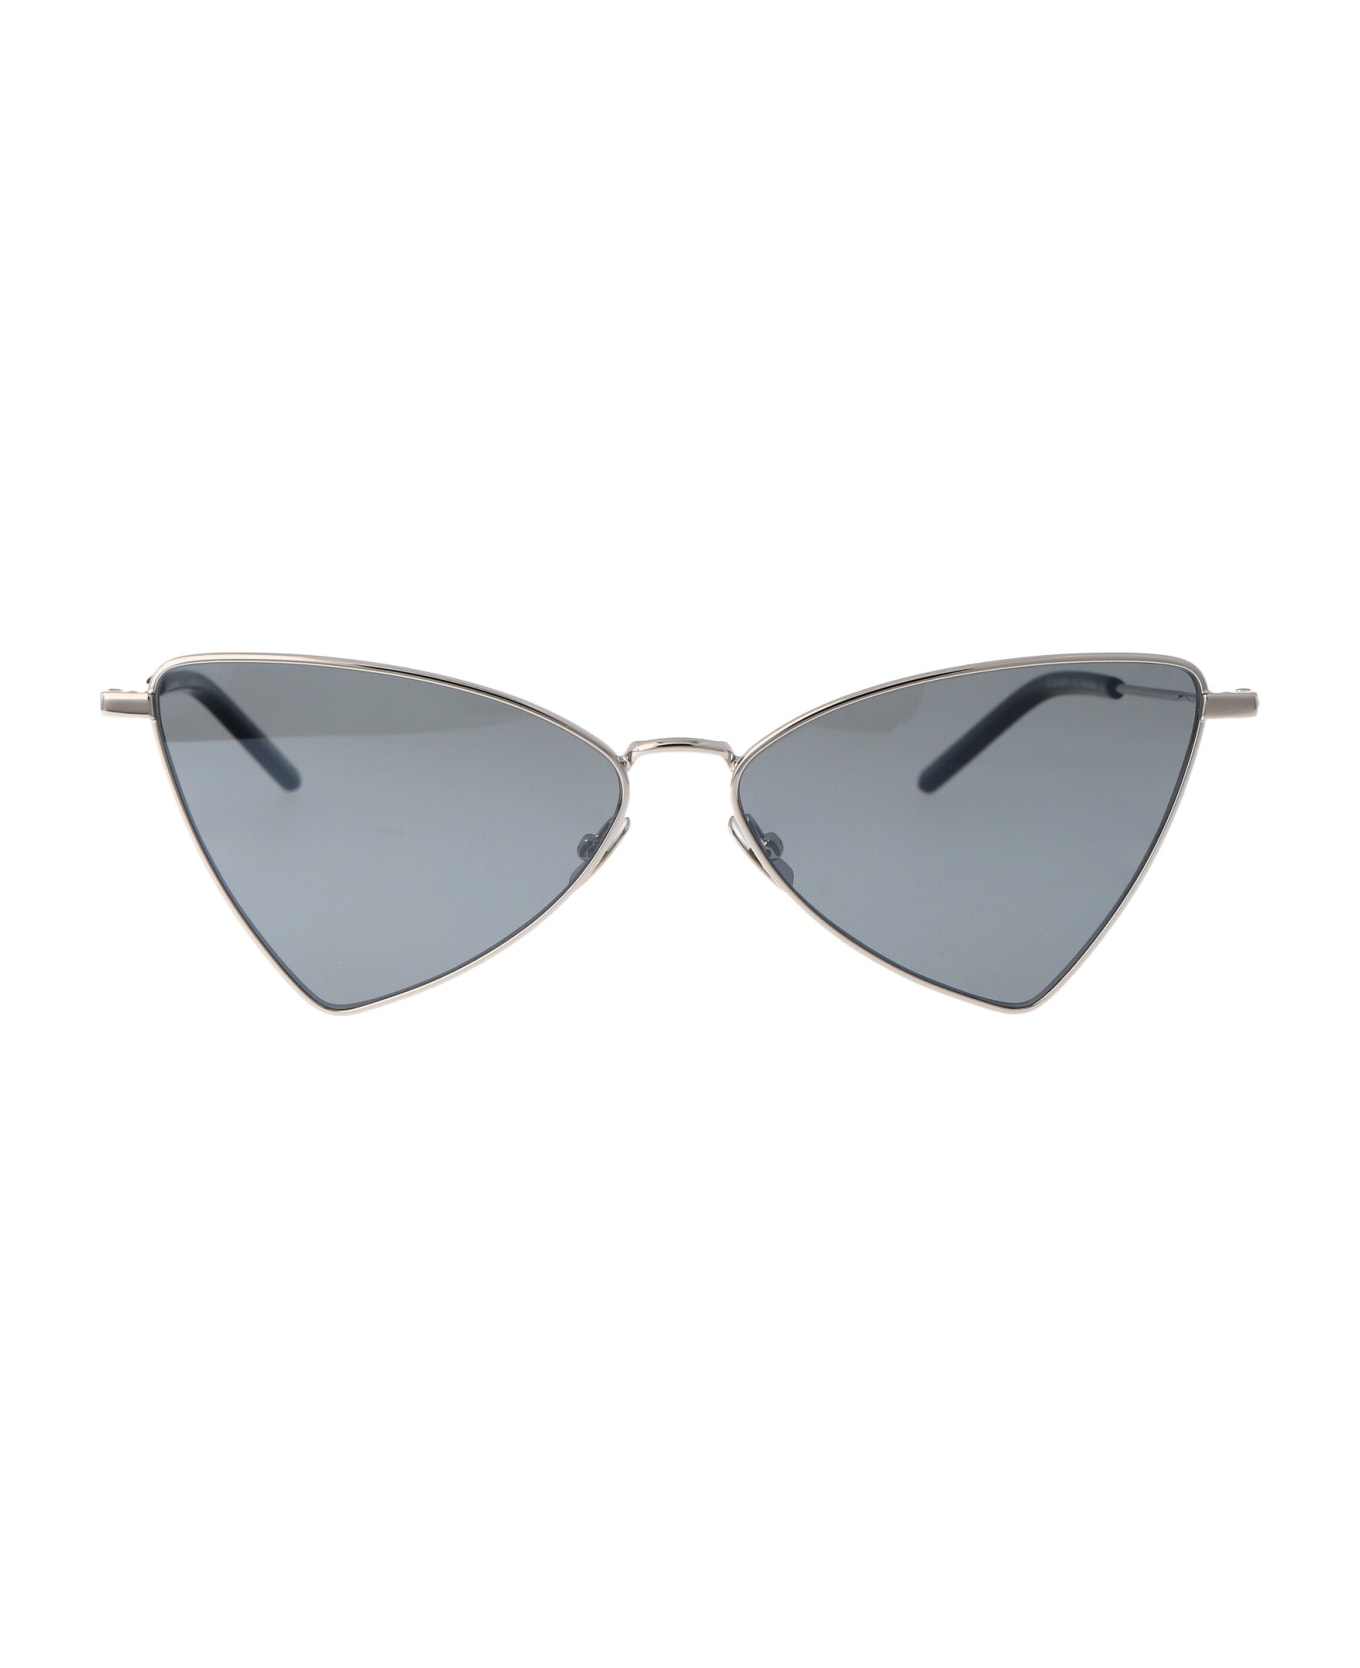 Saint Laurent Eyewear Sl 303 Jerry Sunglasses - 010 SILVER SILVER SILVER サングラス